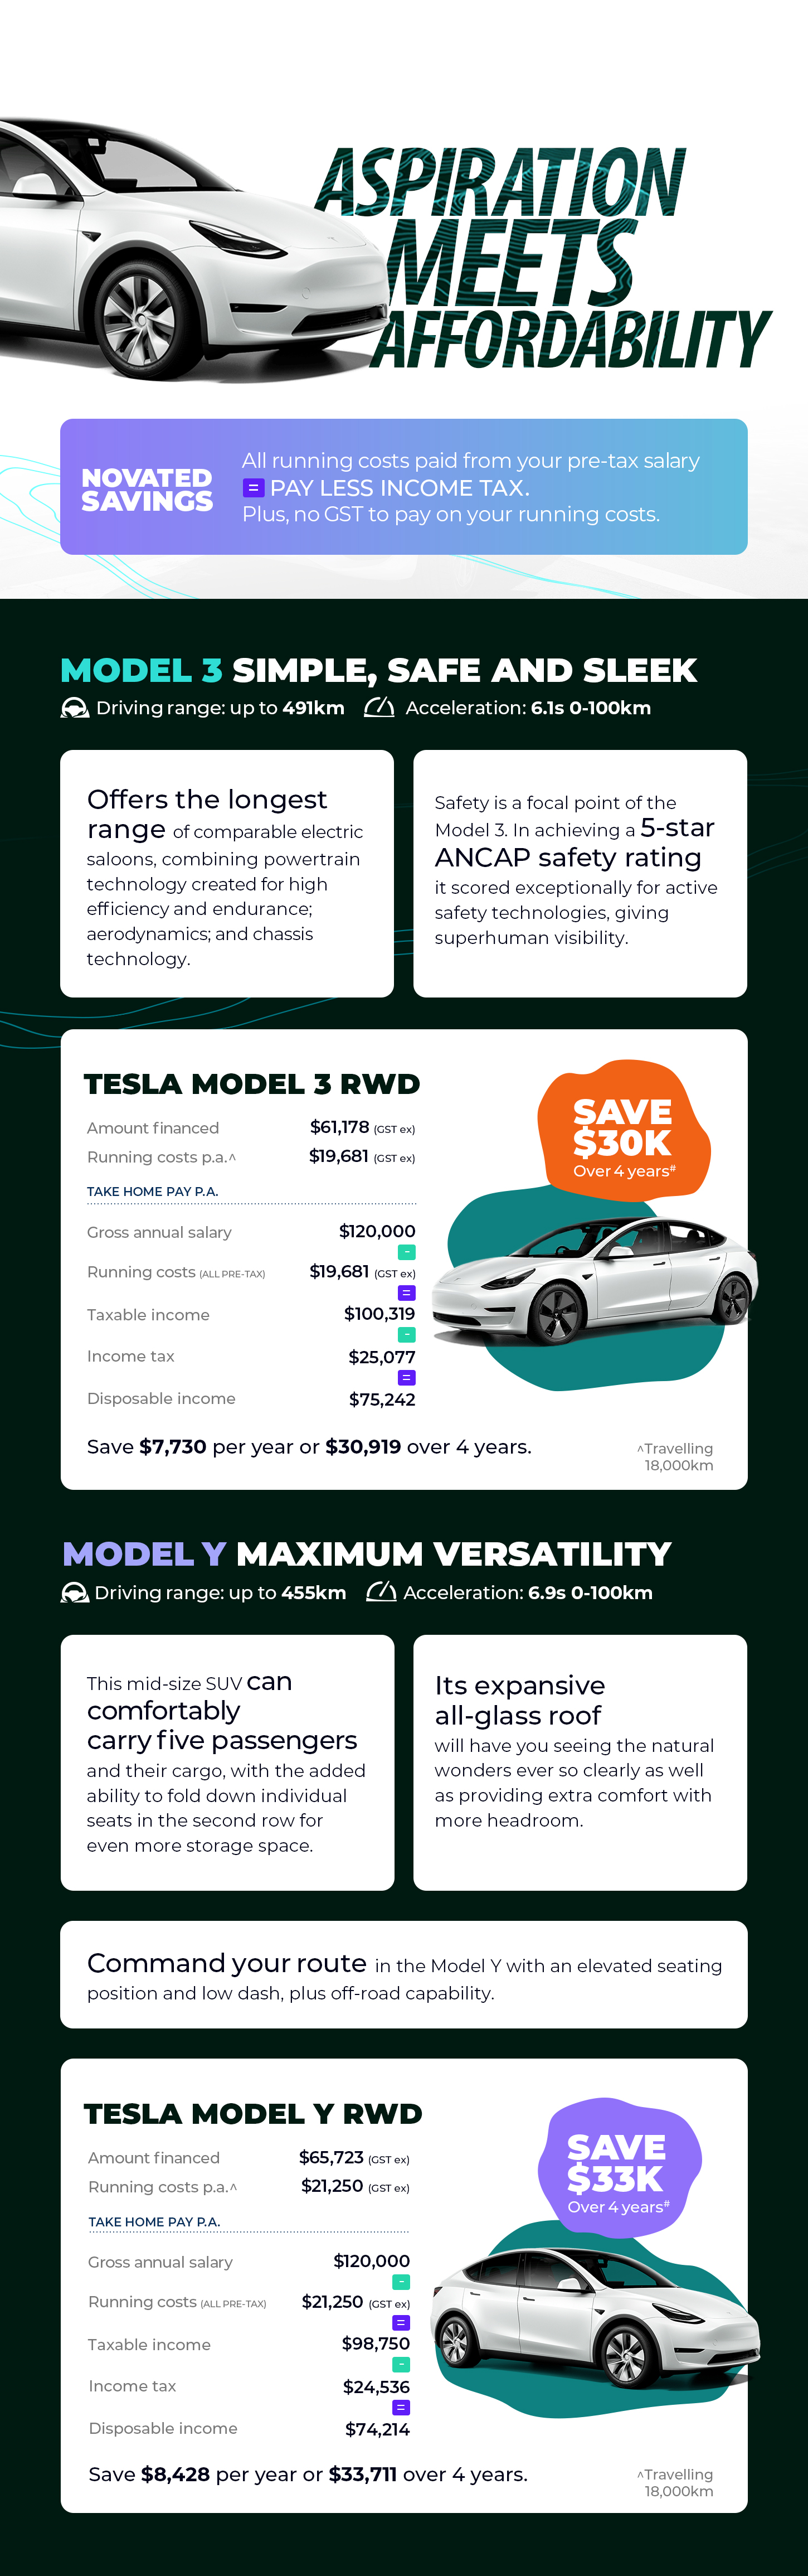 Tesla aspiration meets affordability